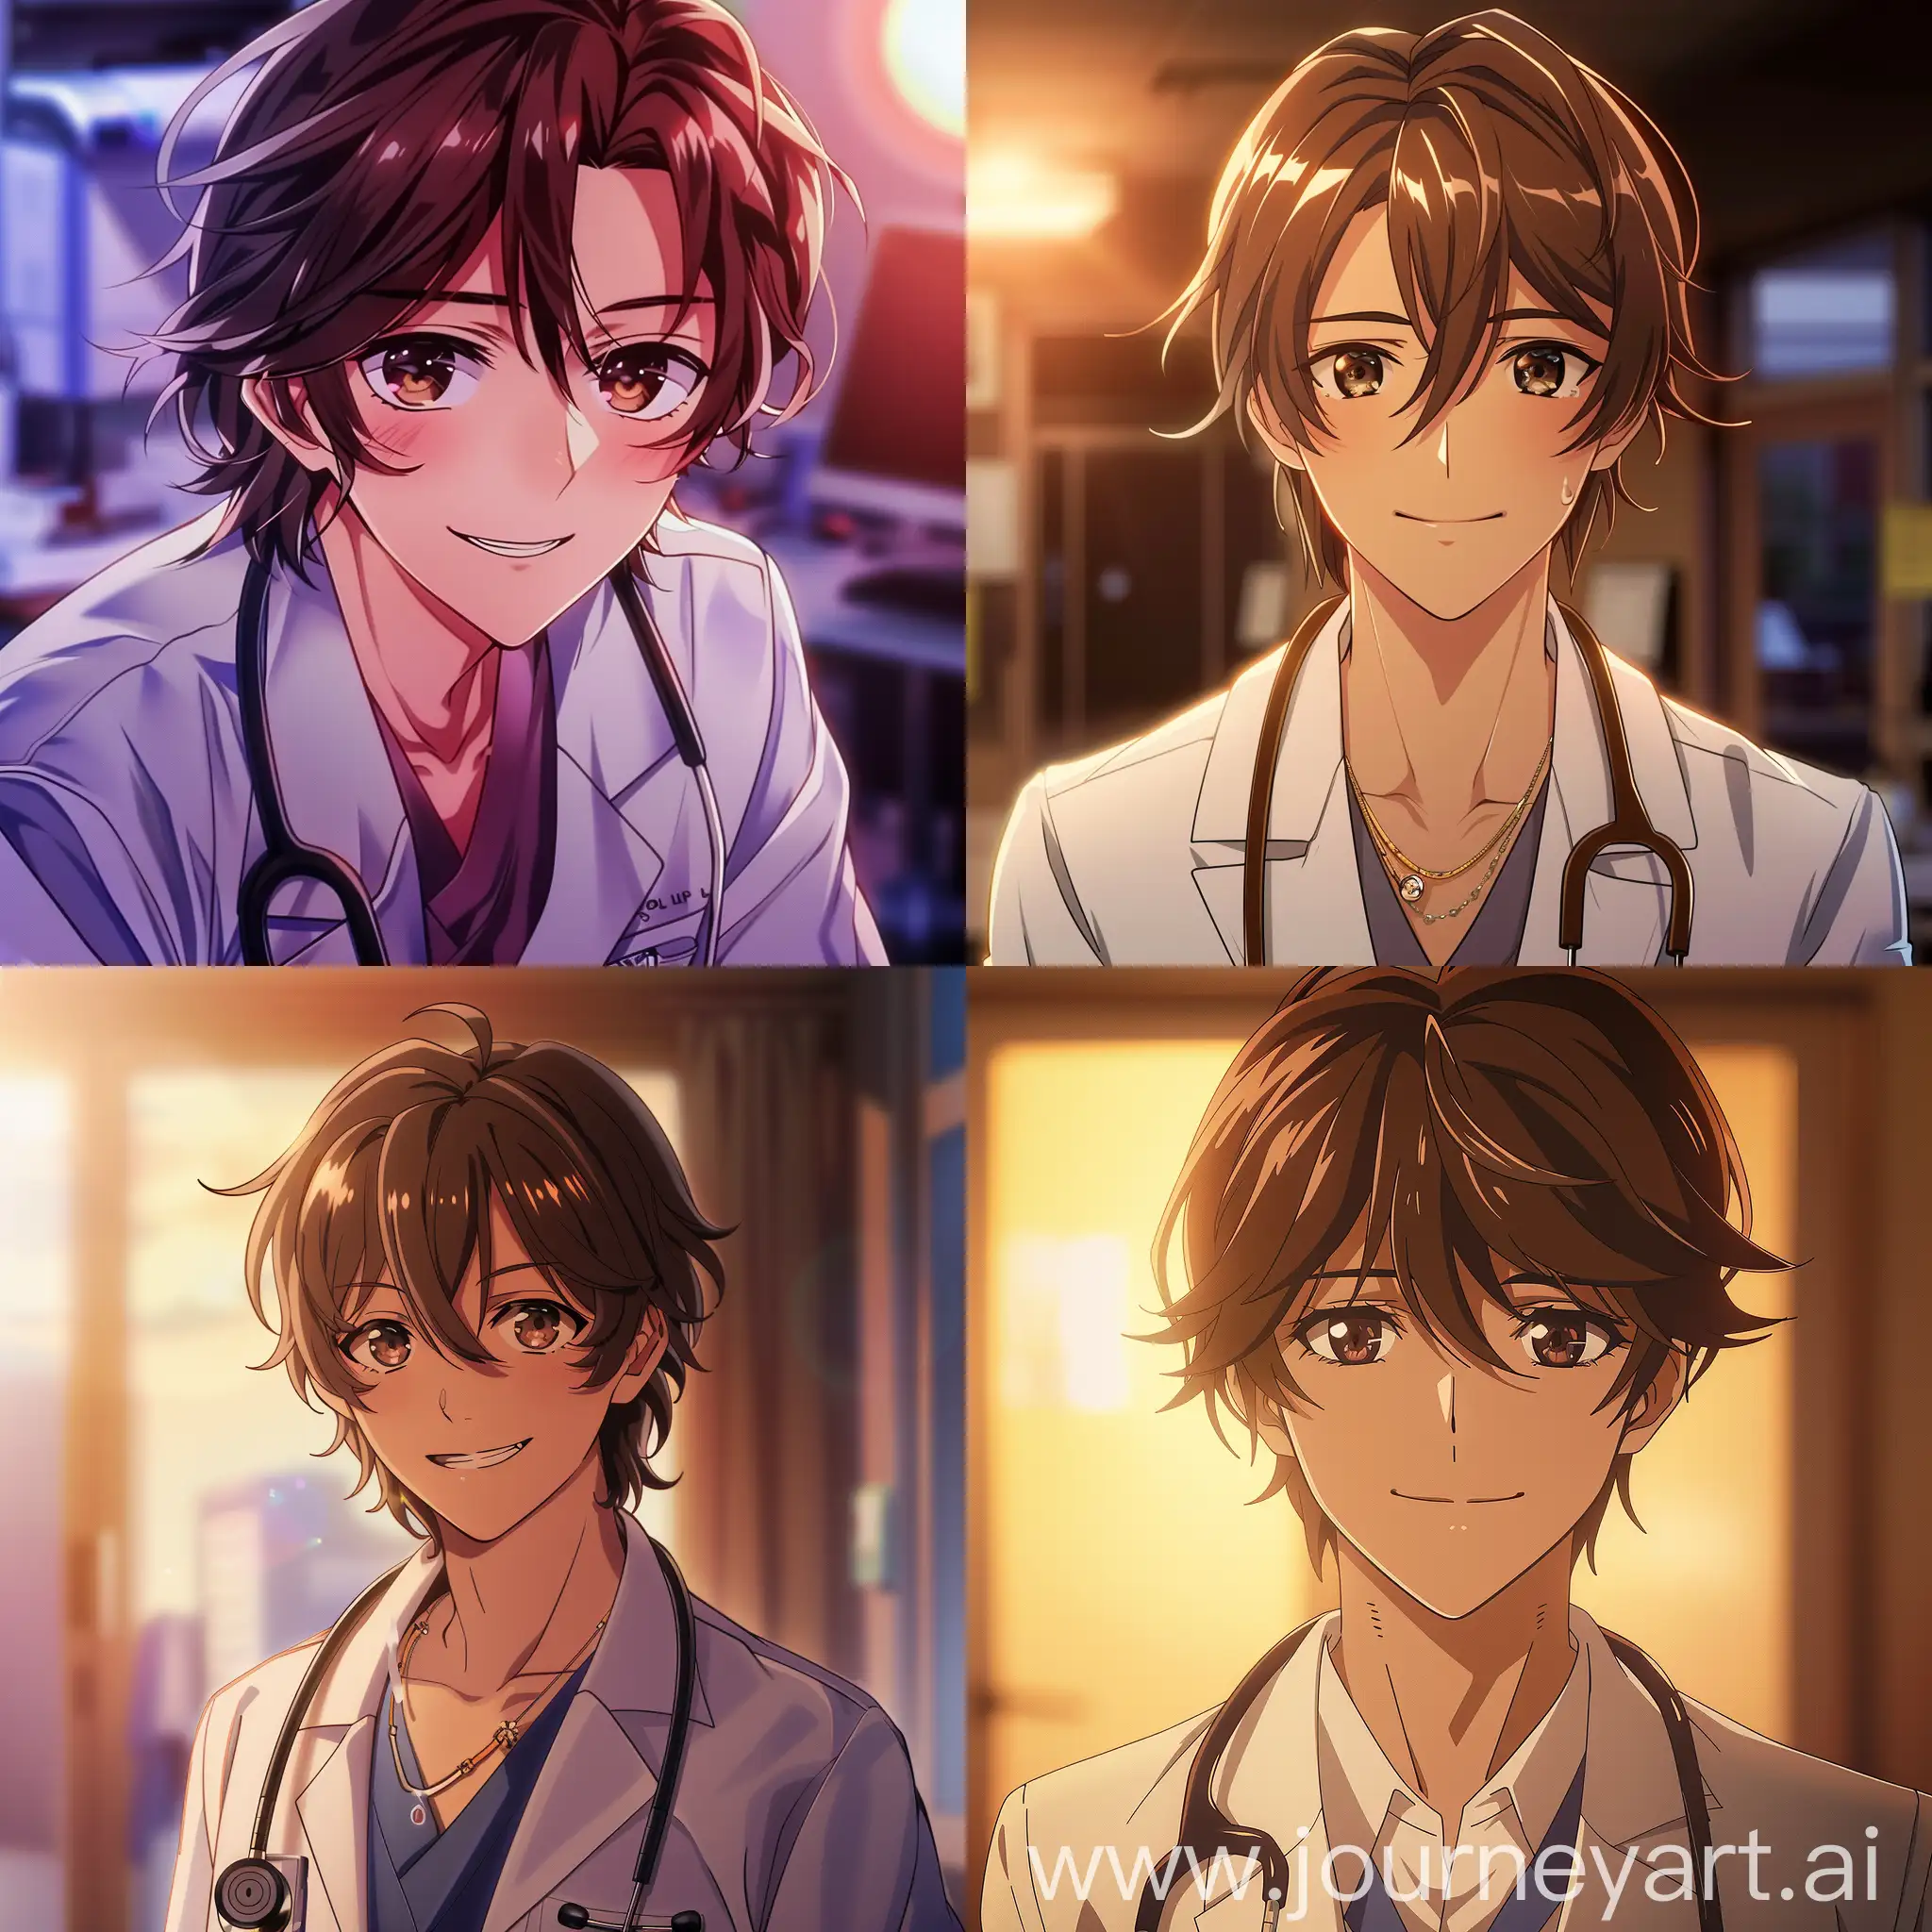 Anime małe, doctor, medium lenght brown hair, deep brown eyes, gentle smile, mysterious yet polite, handsome, 4k, vibrant lighting